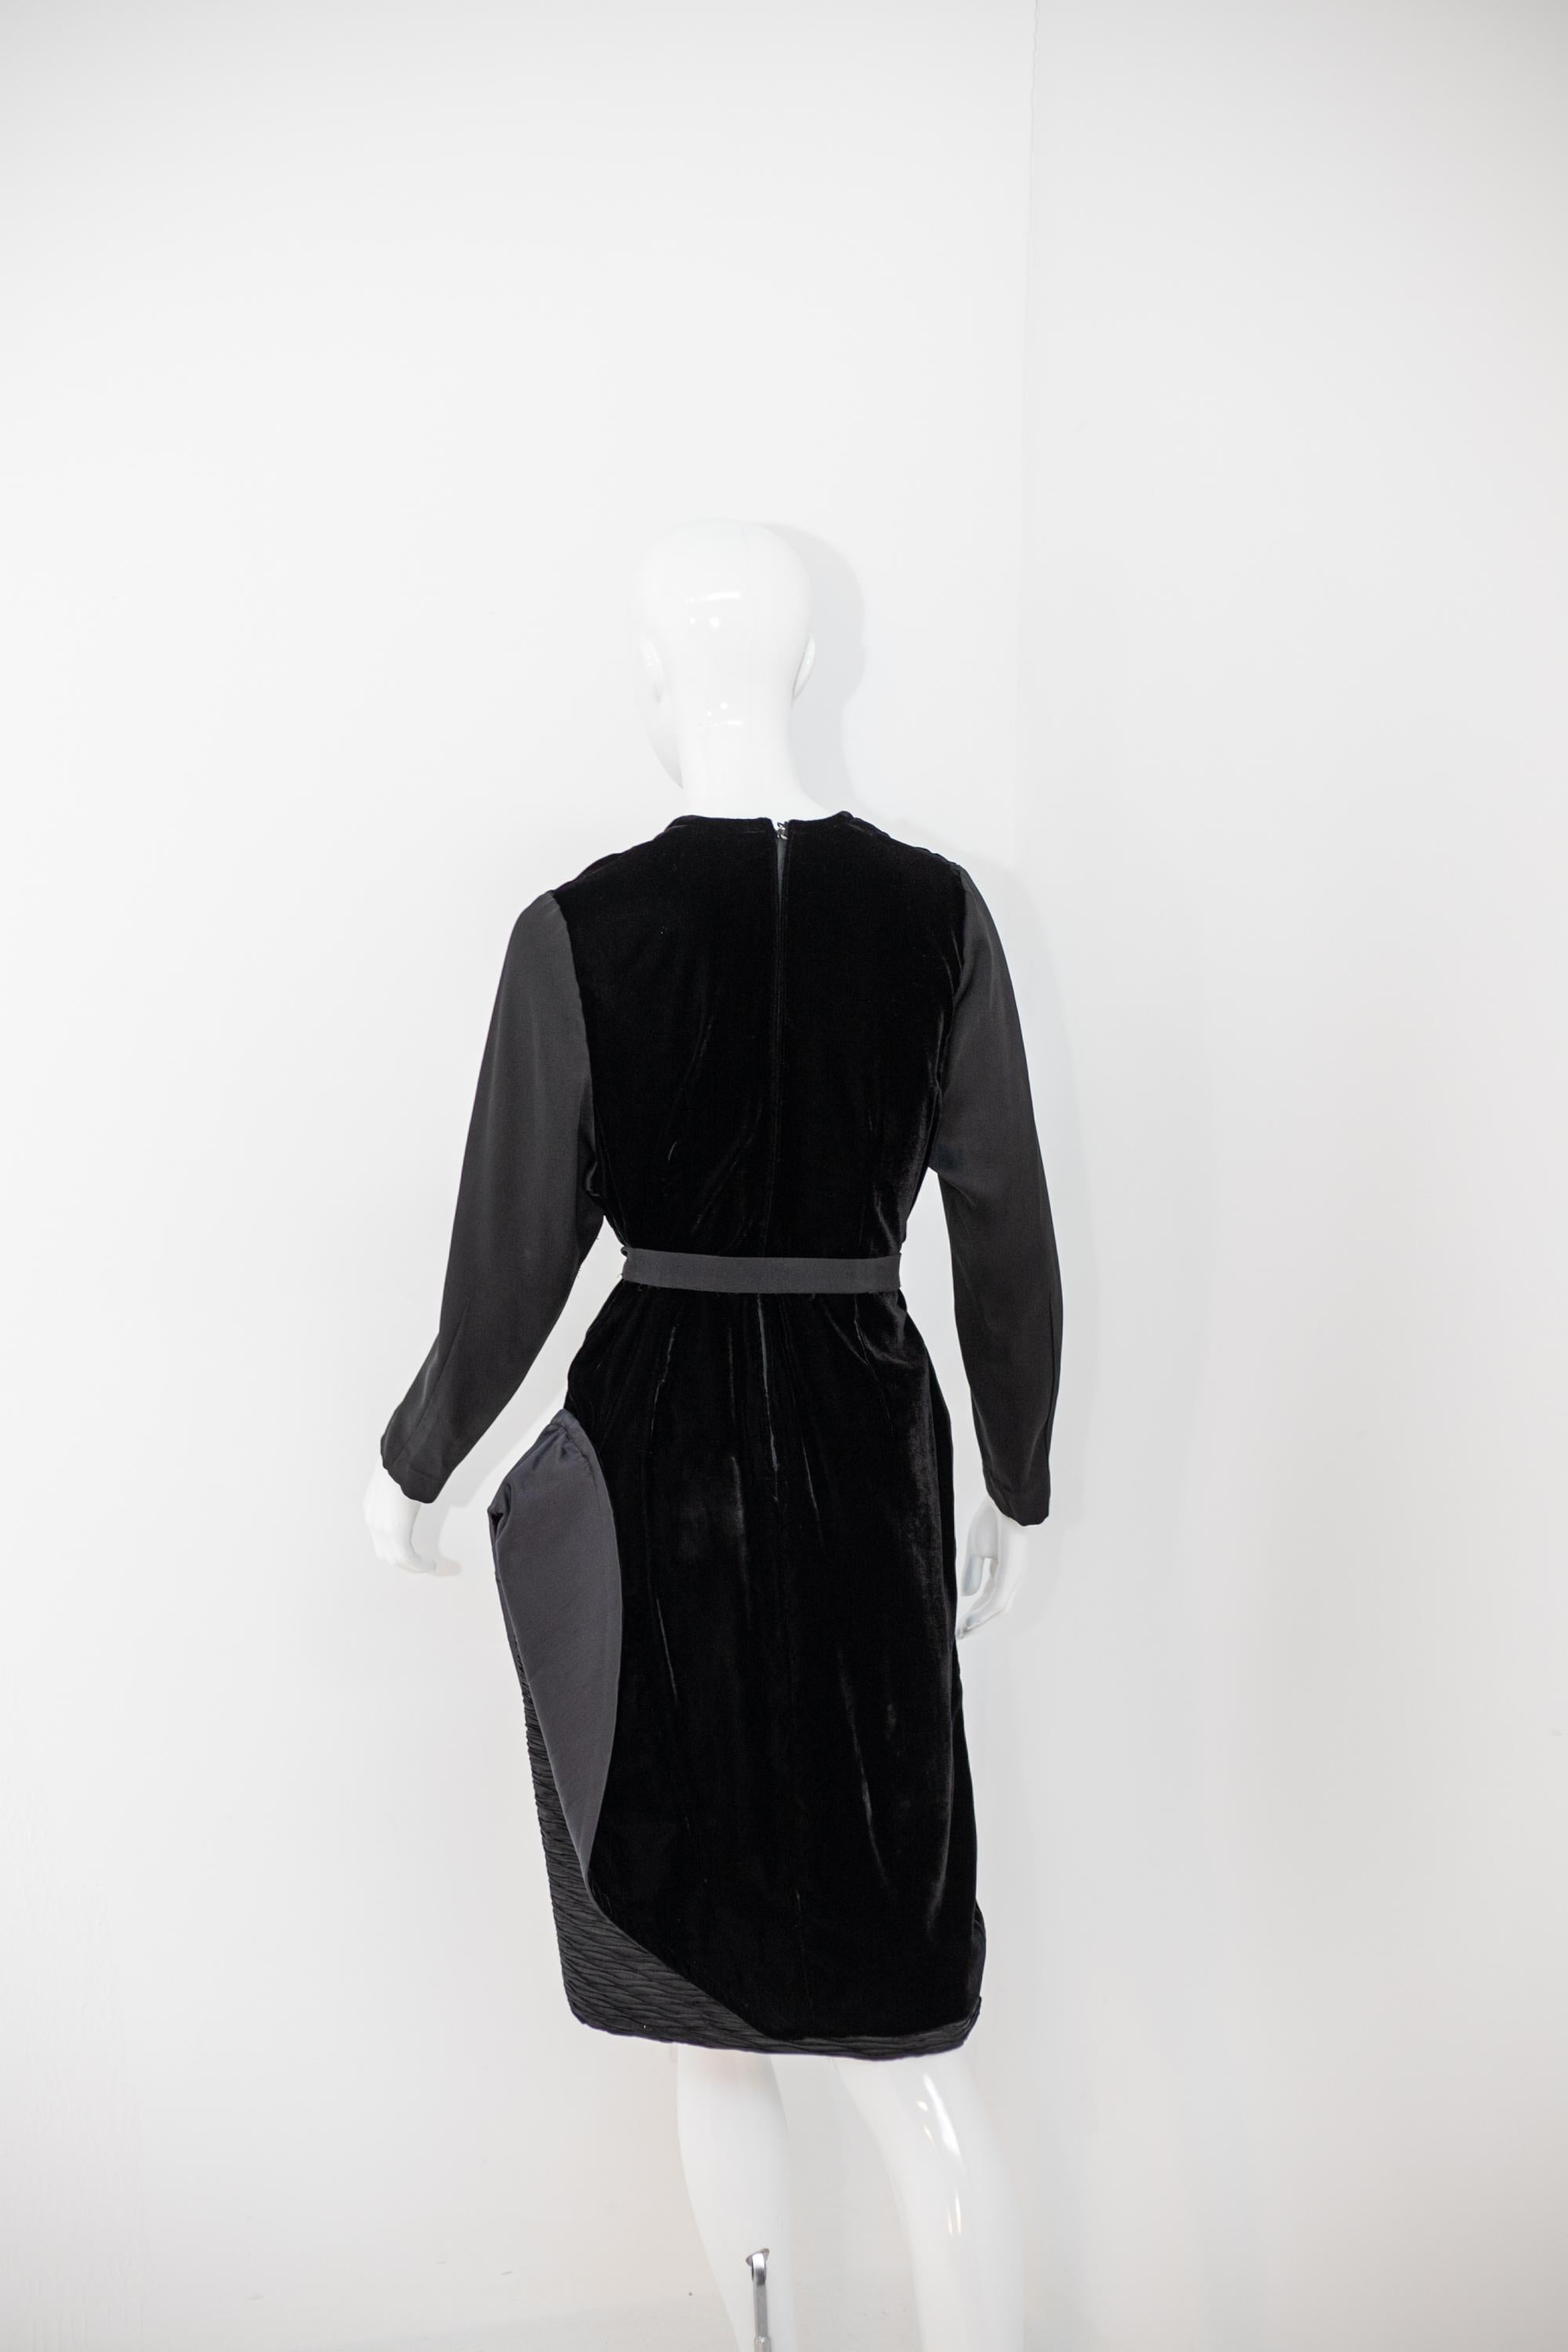 Mila Schön Vintage Black Silk Evening Dress For Sale 2